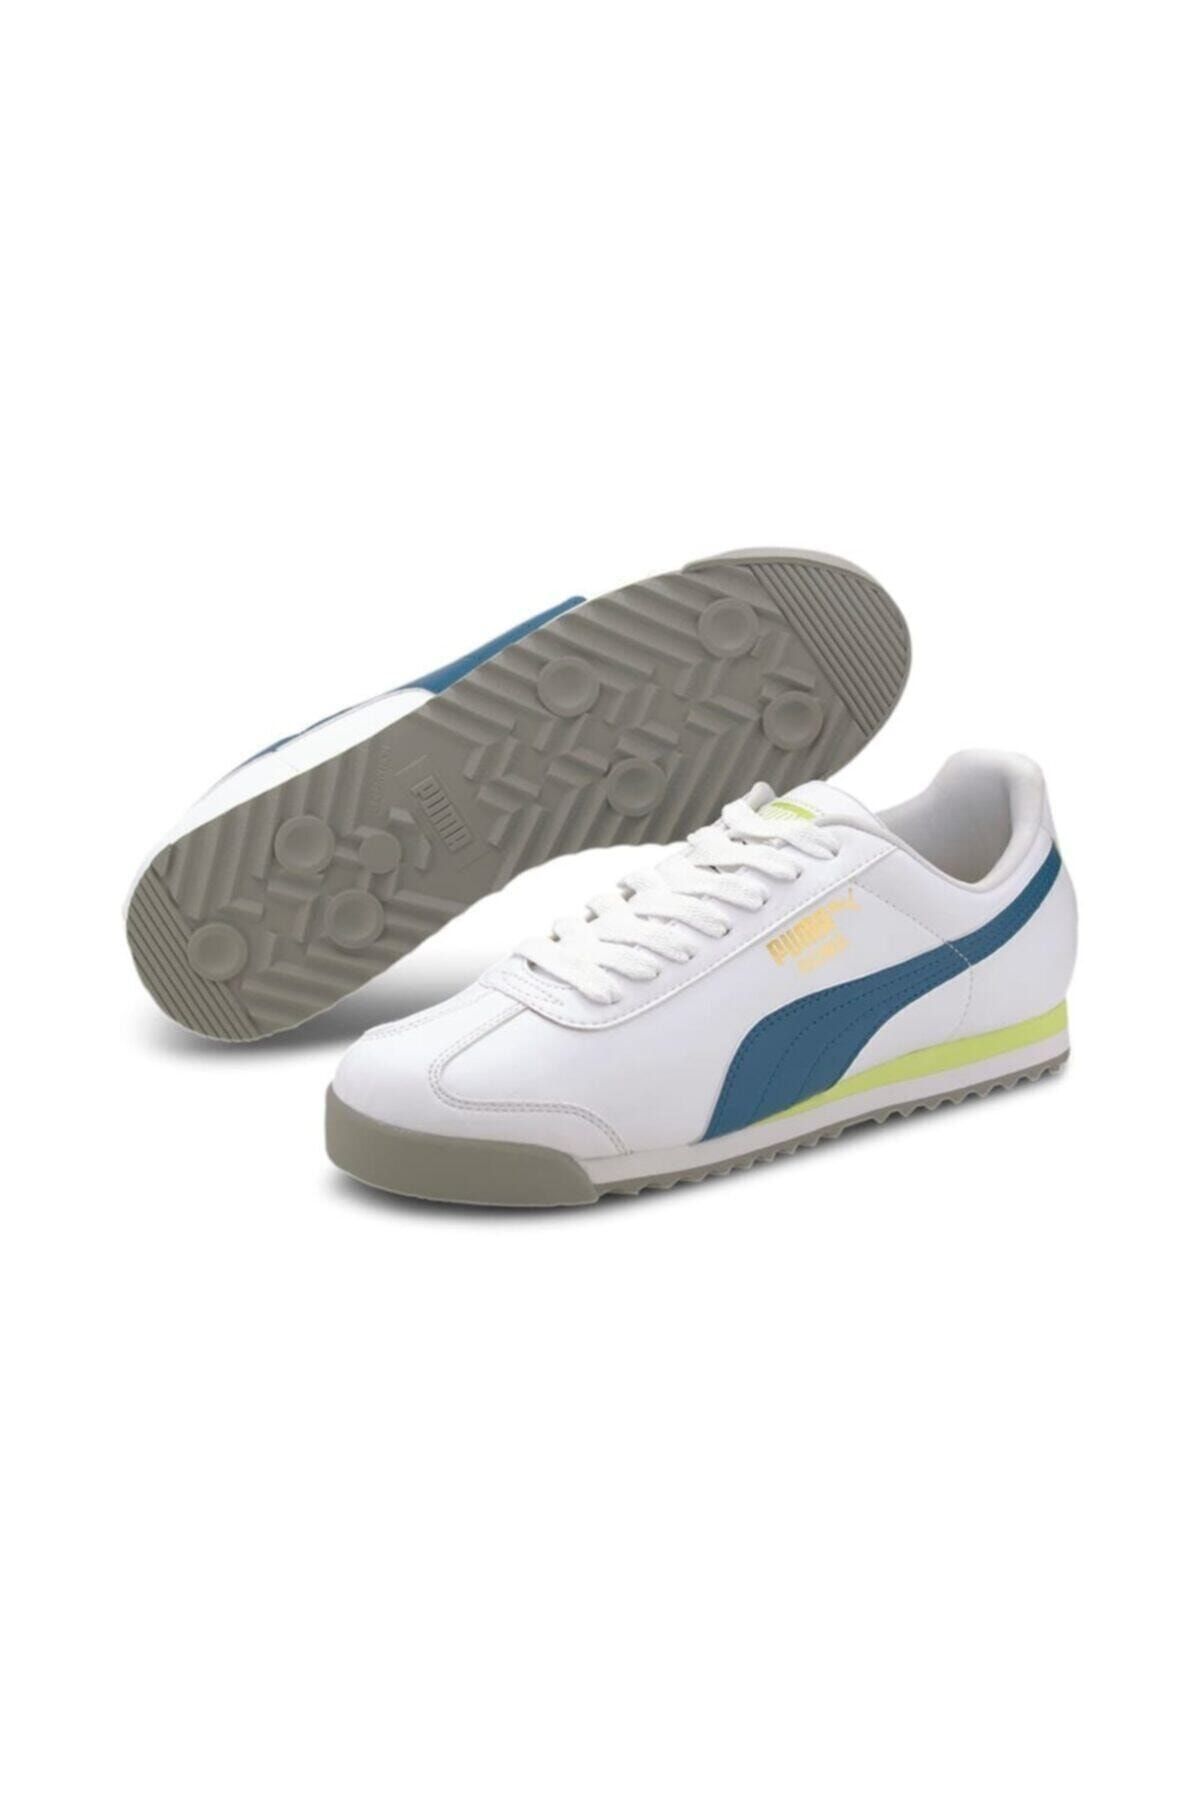 Puma Roma Basic White Digi Blue Günlük Spor Ayakkabı